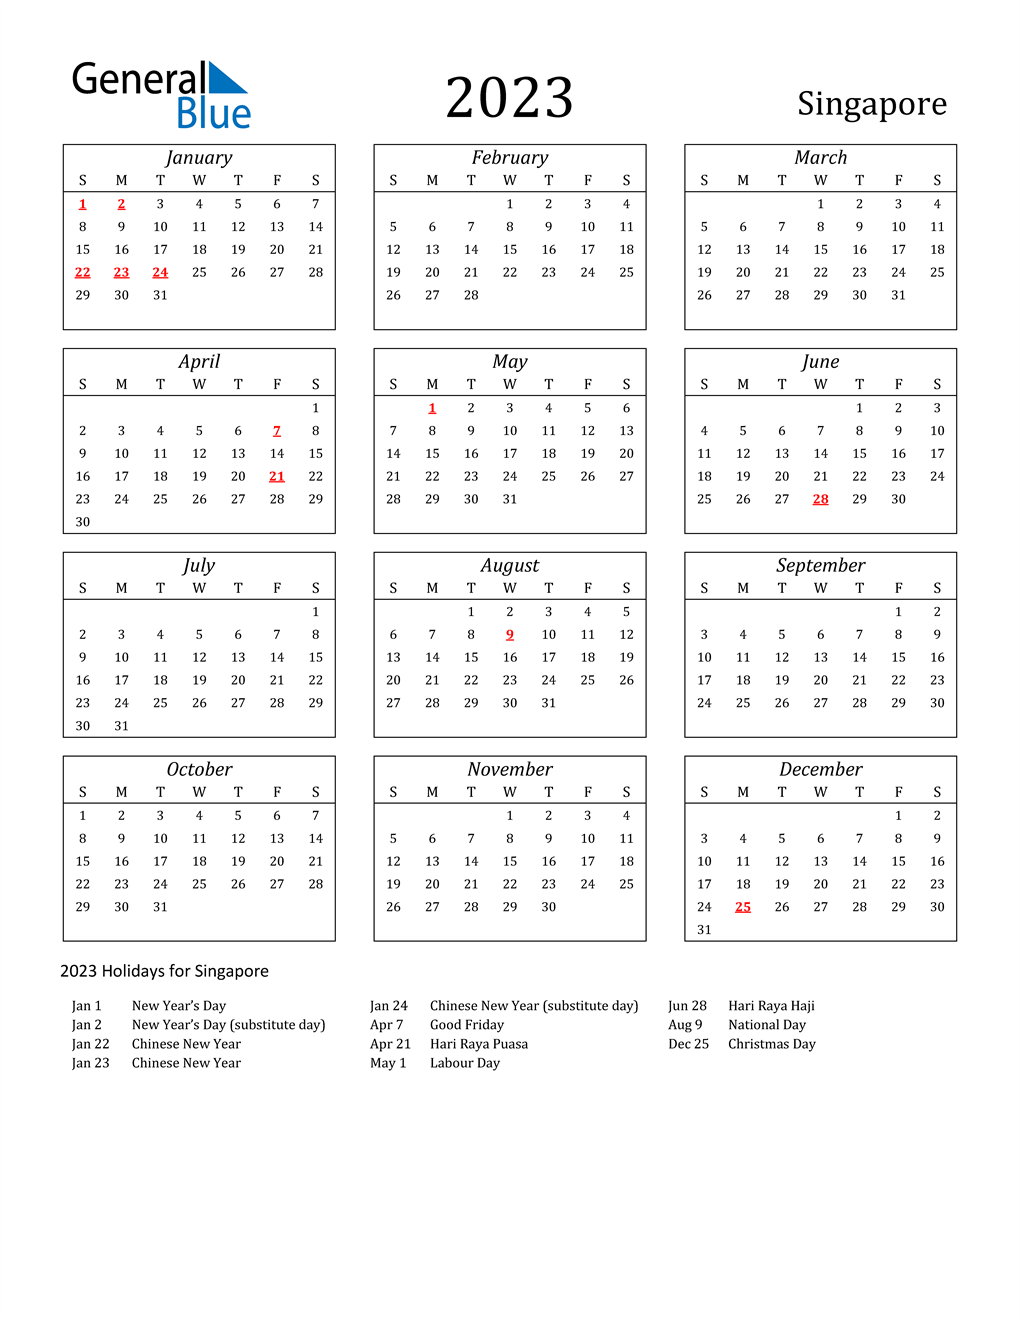 Marist College 2022 2023 Calendar 2023 Singapore Calendar With Holidays